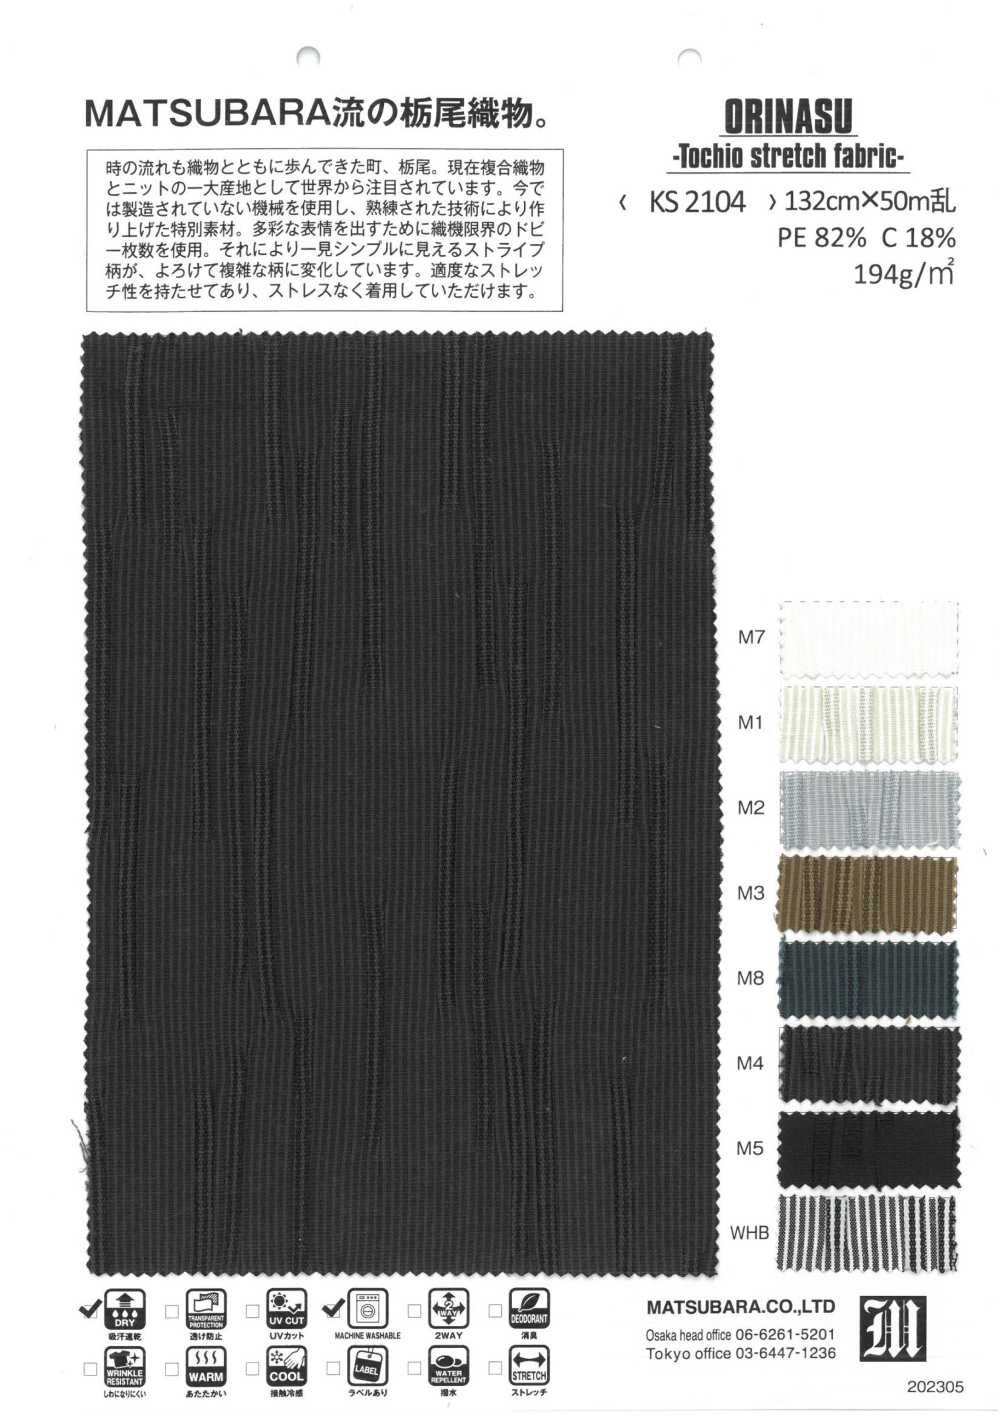 KS2104 ORINASU -Tochio Stretch Fabric-[Textile / Fabric] Matsubara